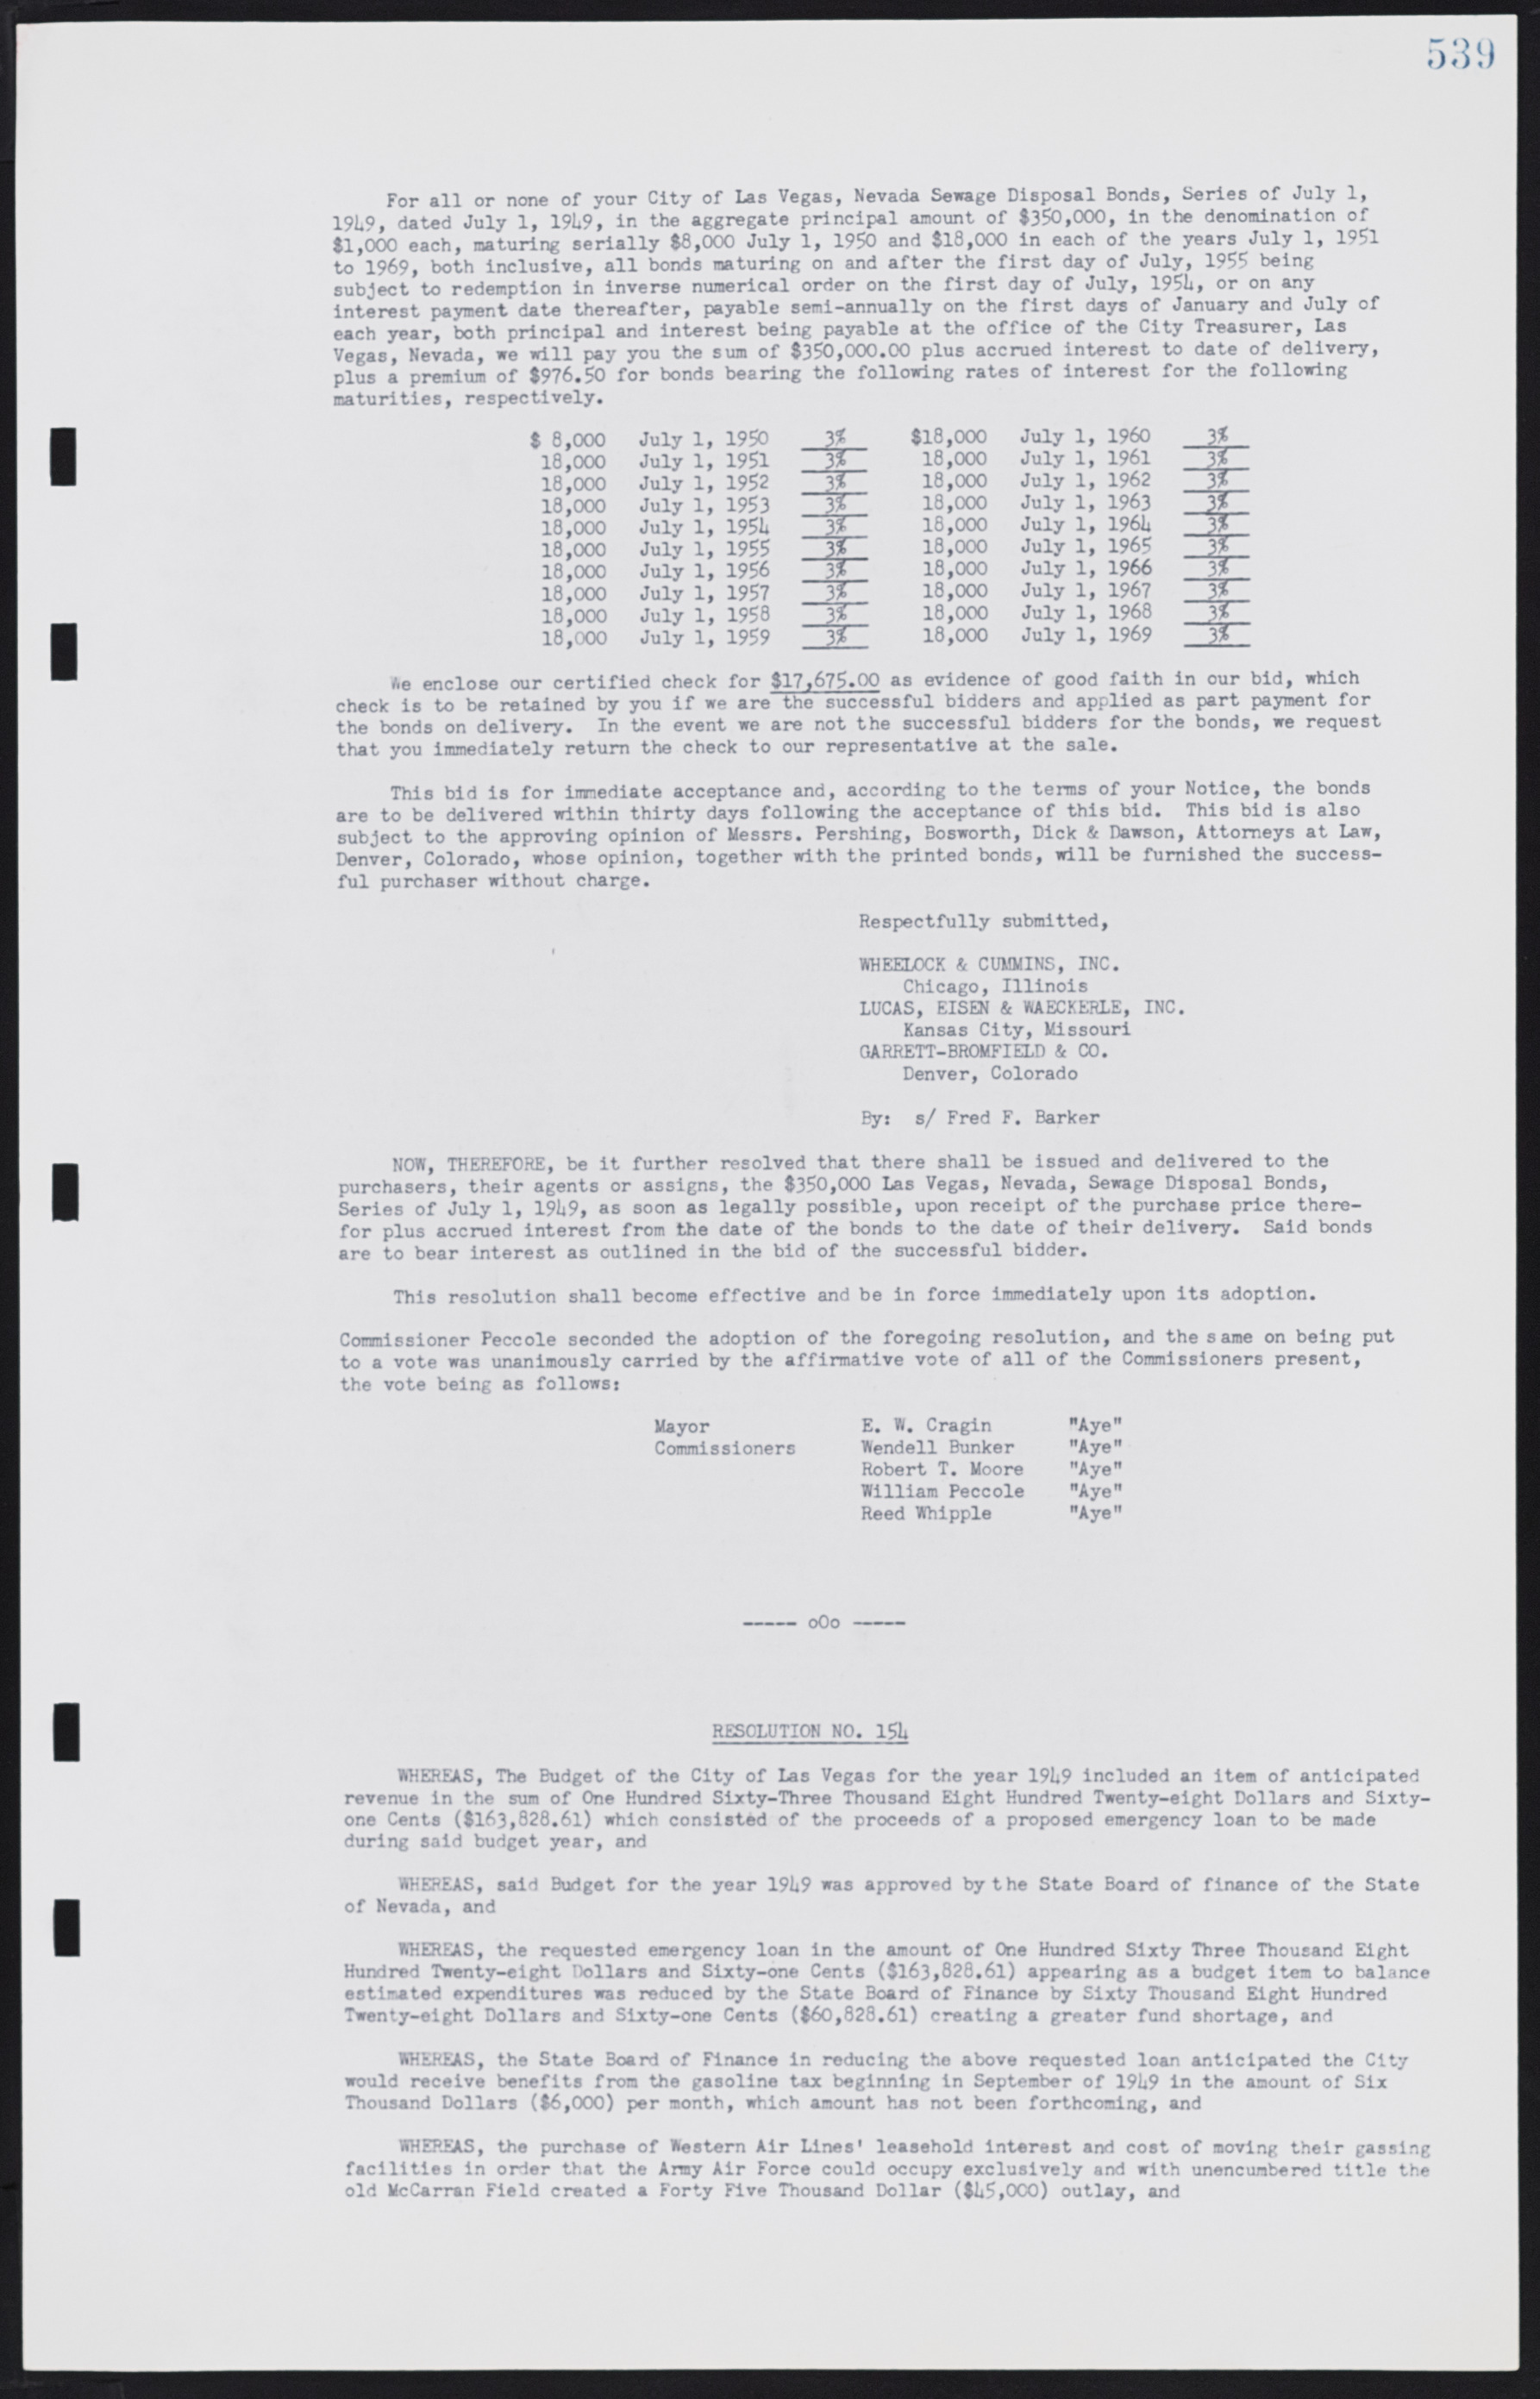 Las Vegas City Commission Minutes, January 7, 1947 to October 26, 1949, lvc000006-569